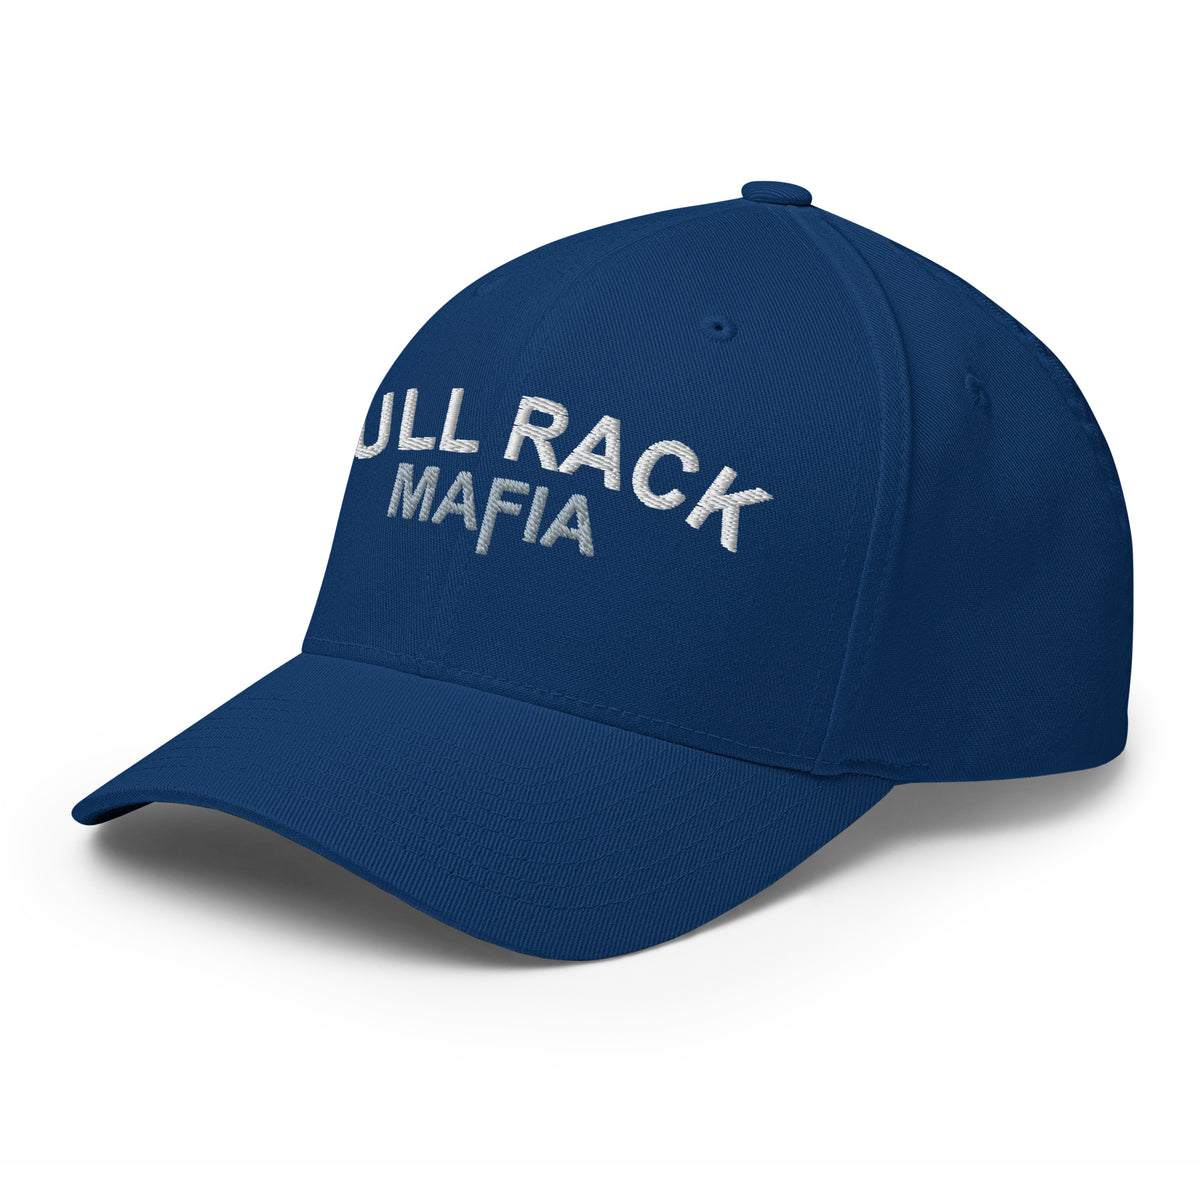 Bull Rack Mafia - Bull Hauler - Embroidered Fitted Hat - Free Shipping